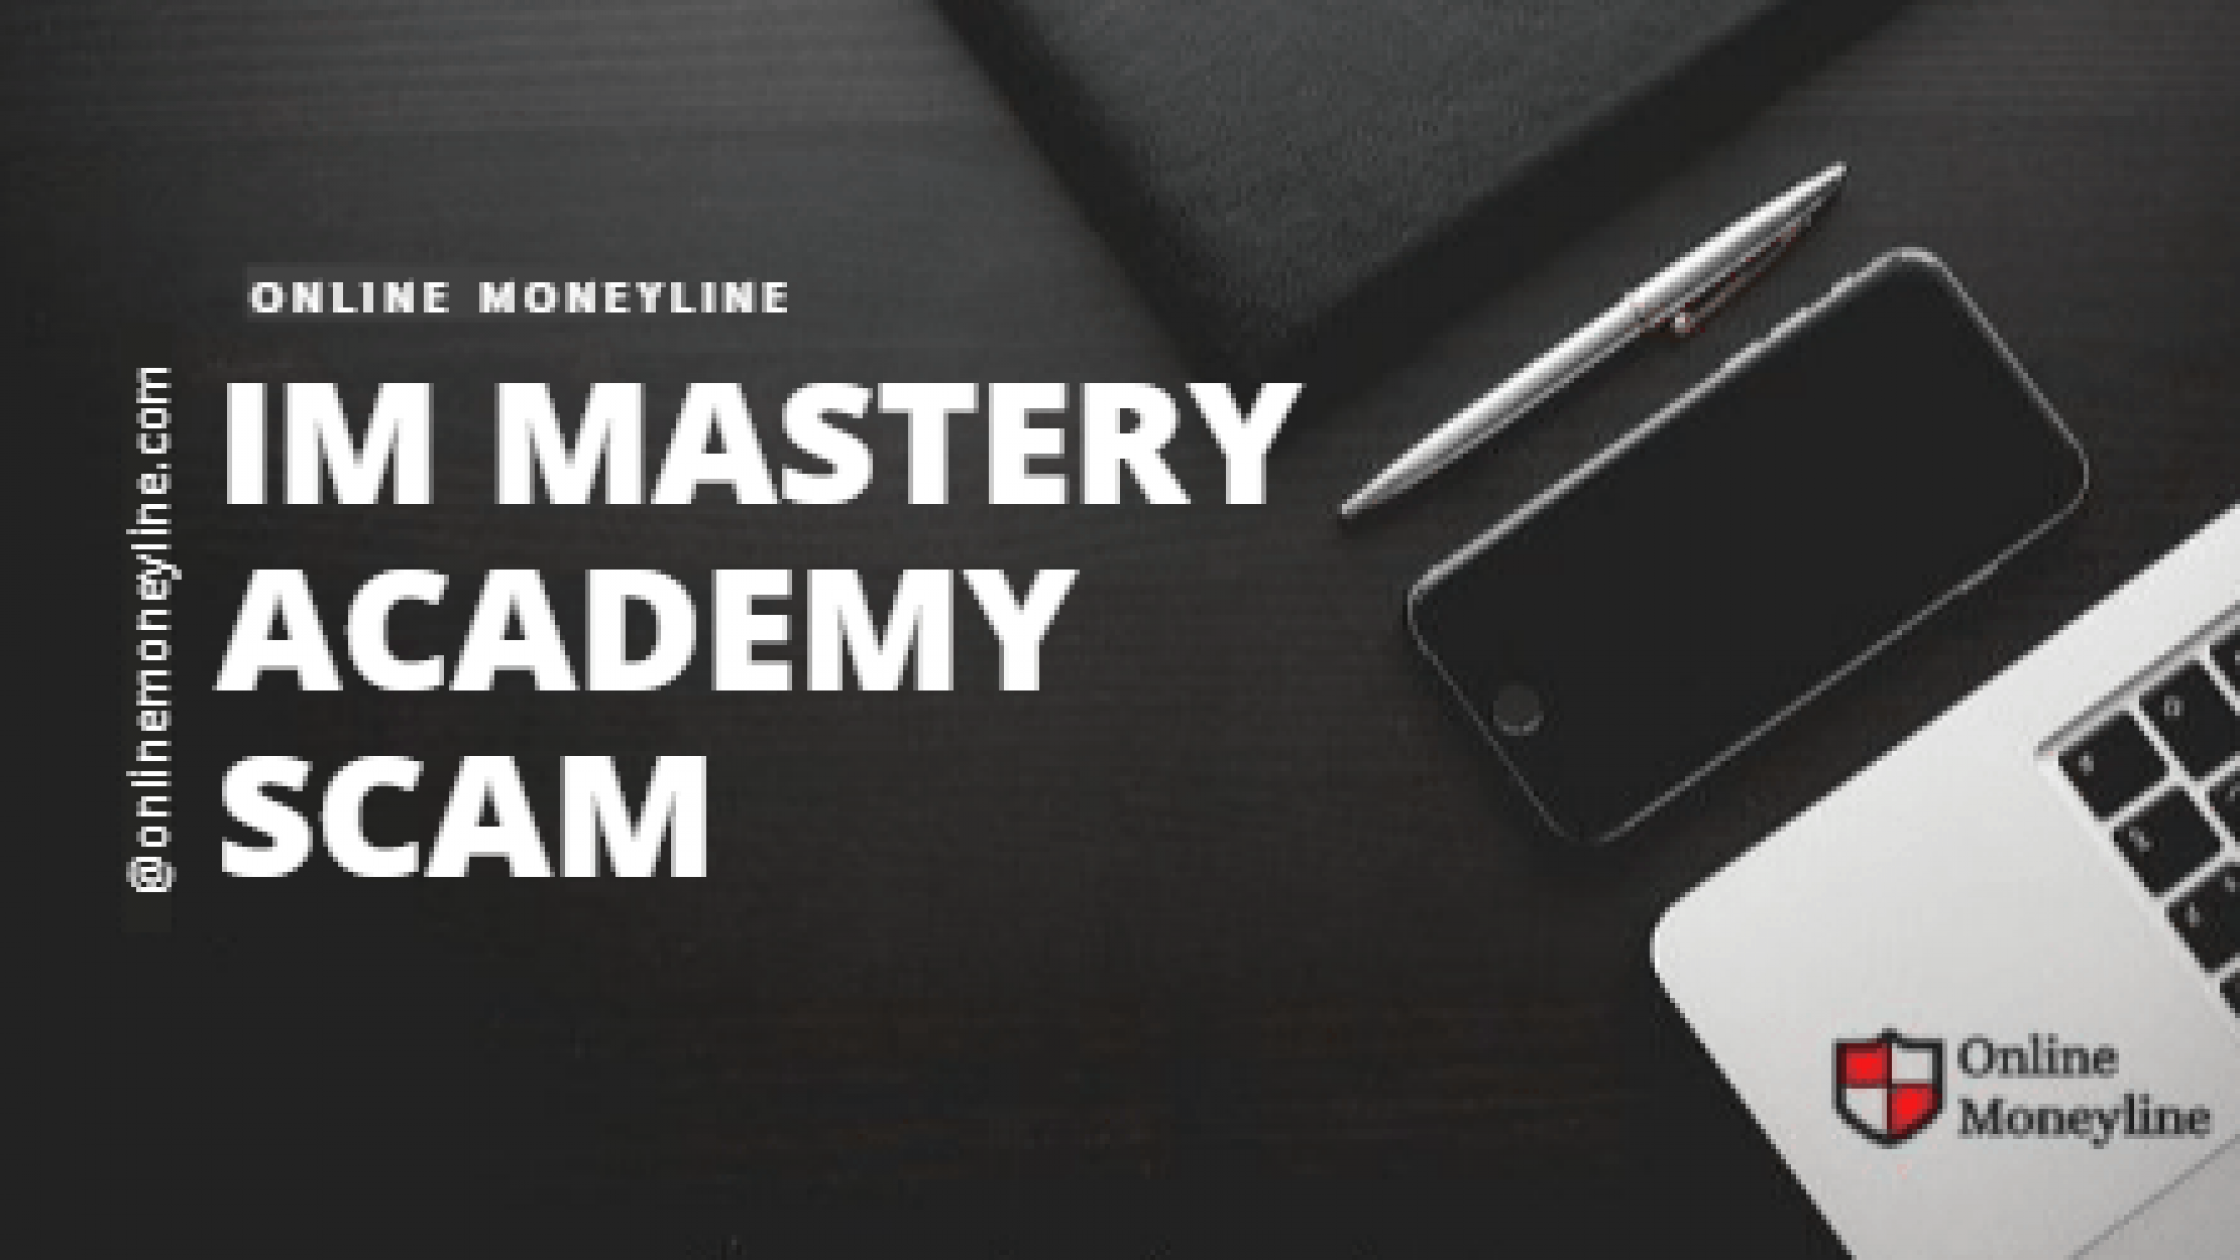 IM Mastery Academy Scam